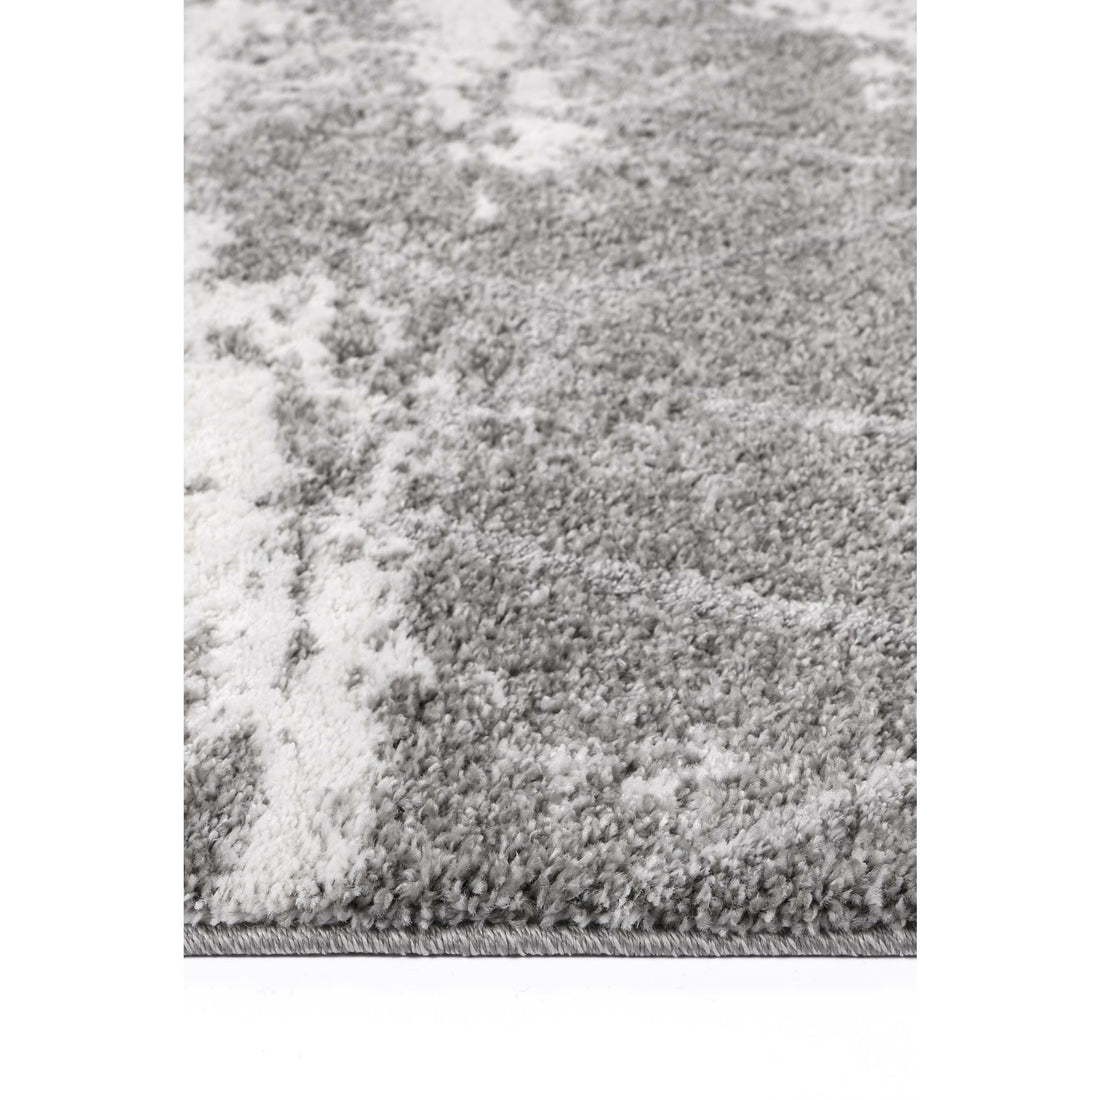 Yuzil Grey Abstract Rug 280x380cm